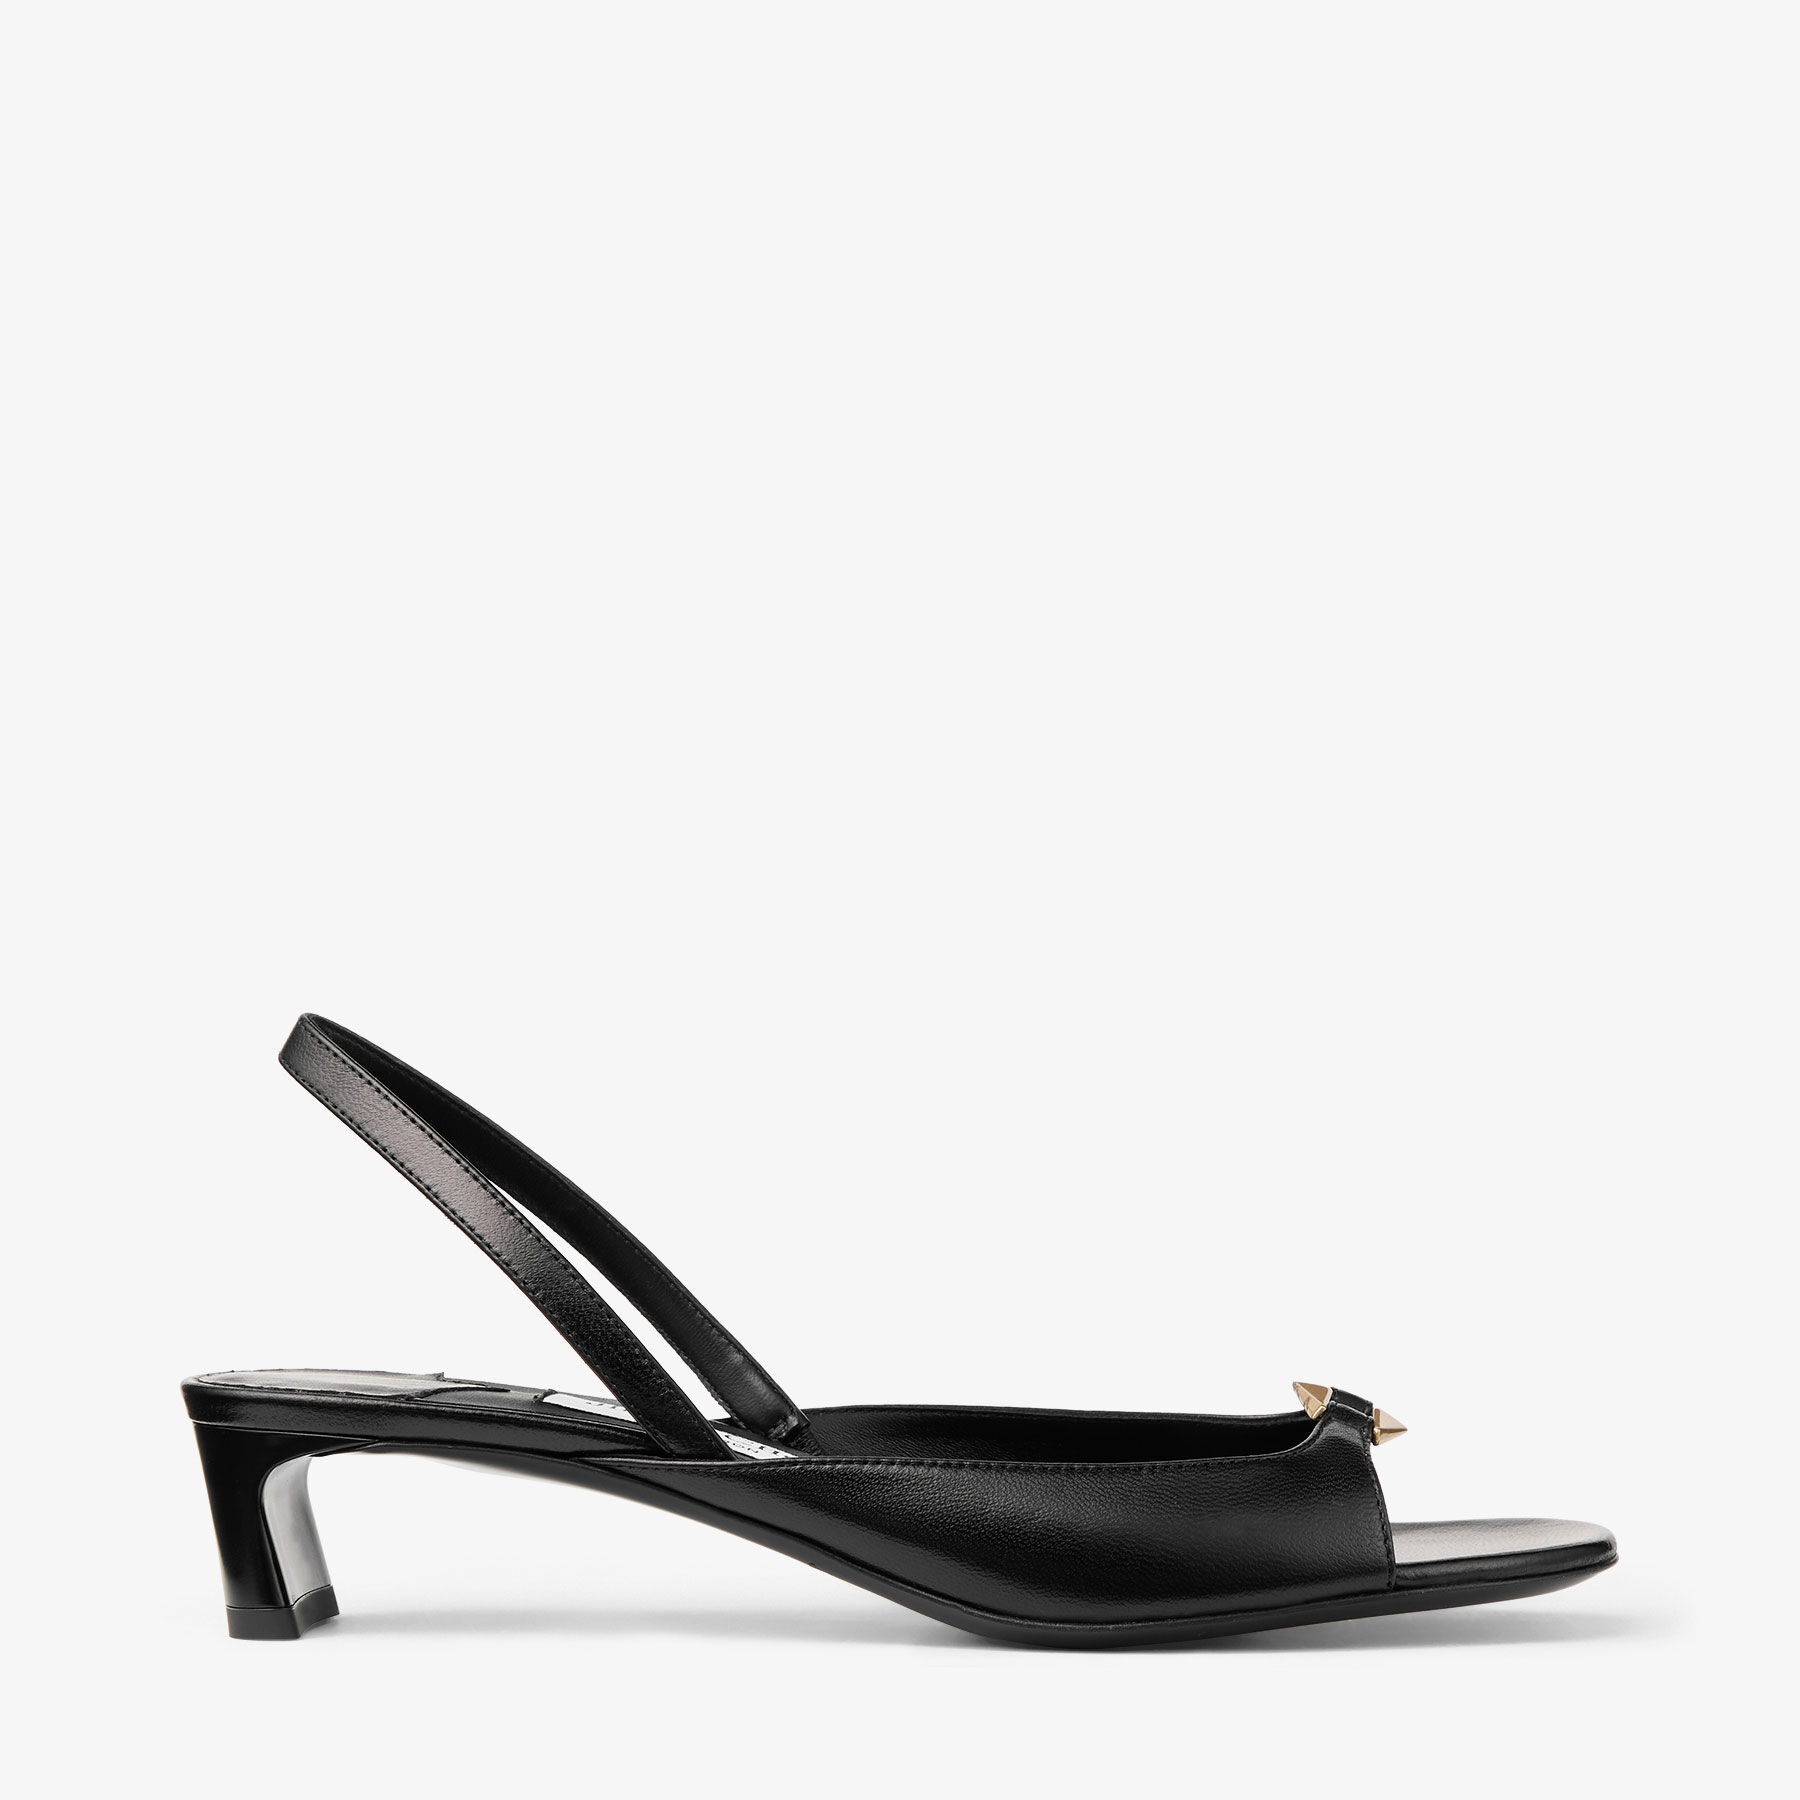 Lev 35
Black Nappa Leather Sandals - 1